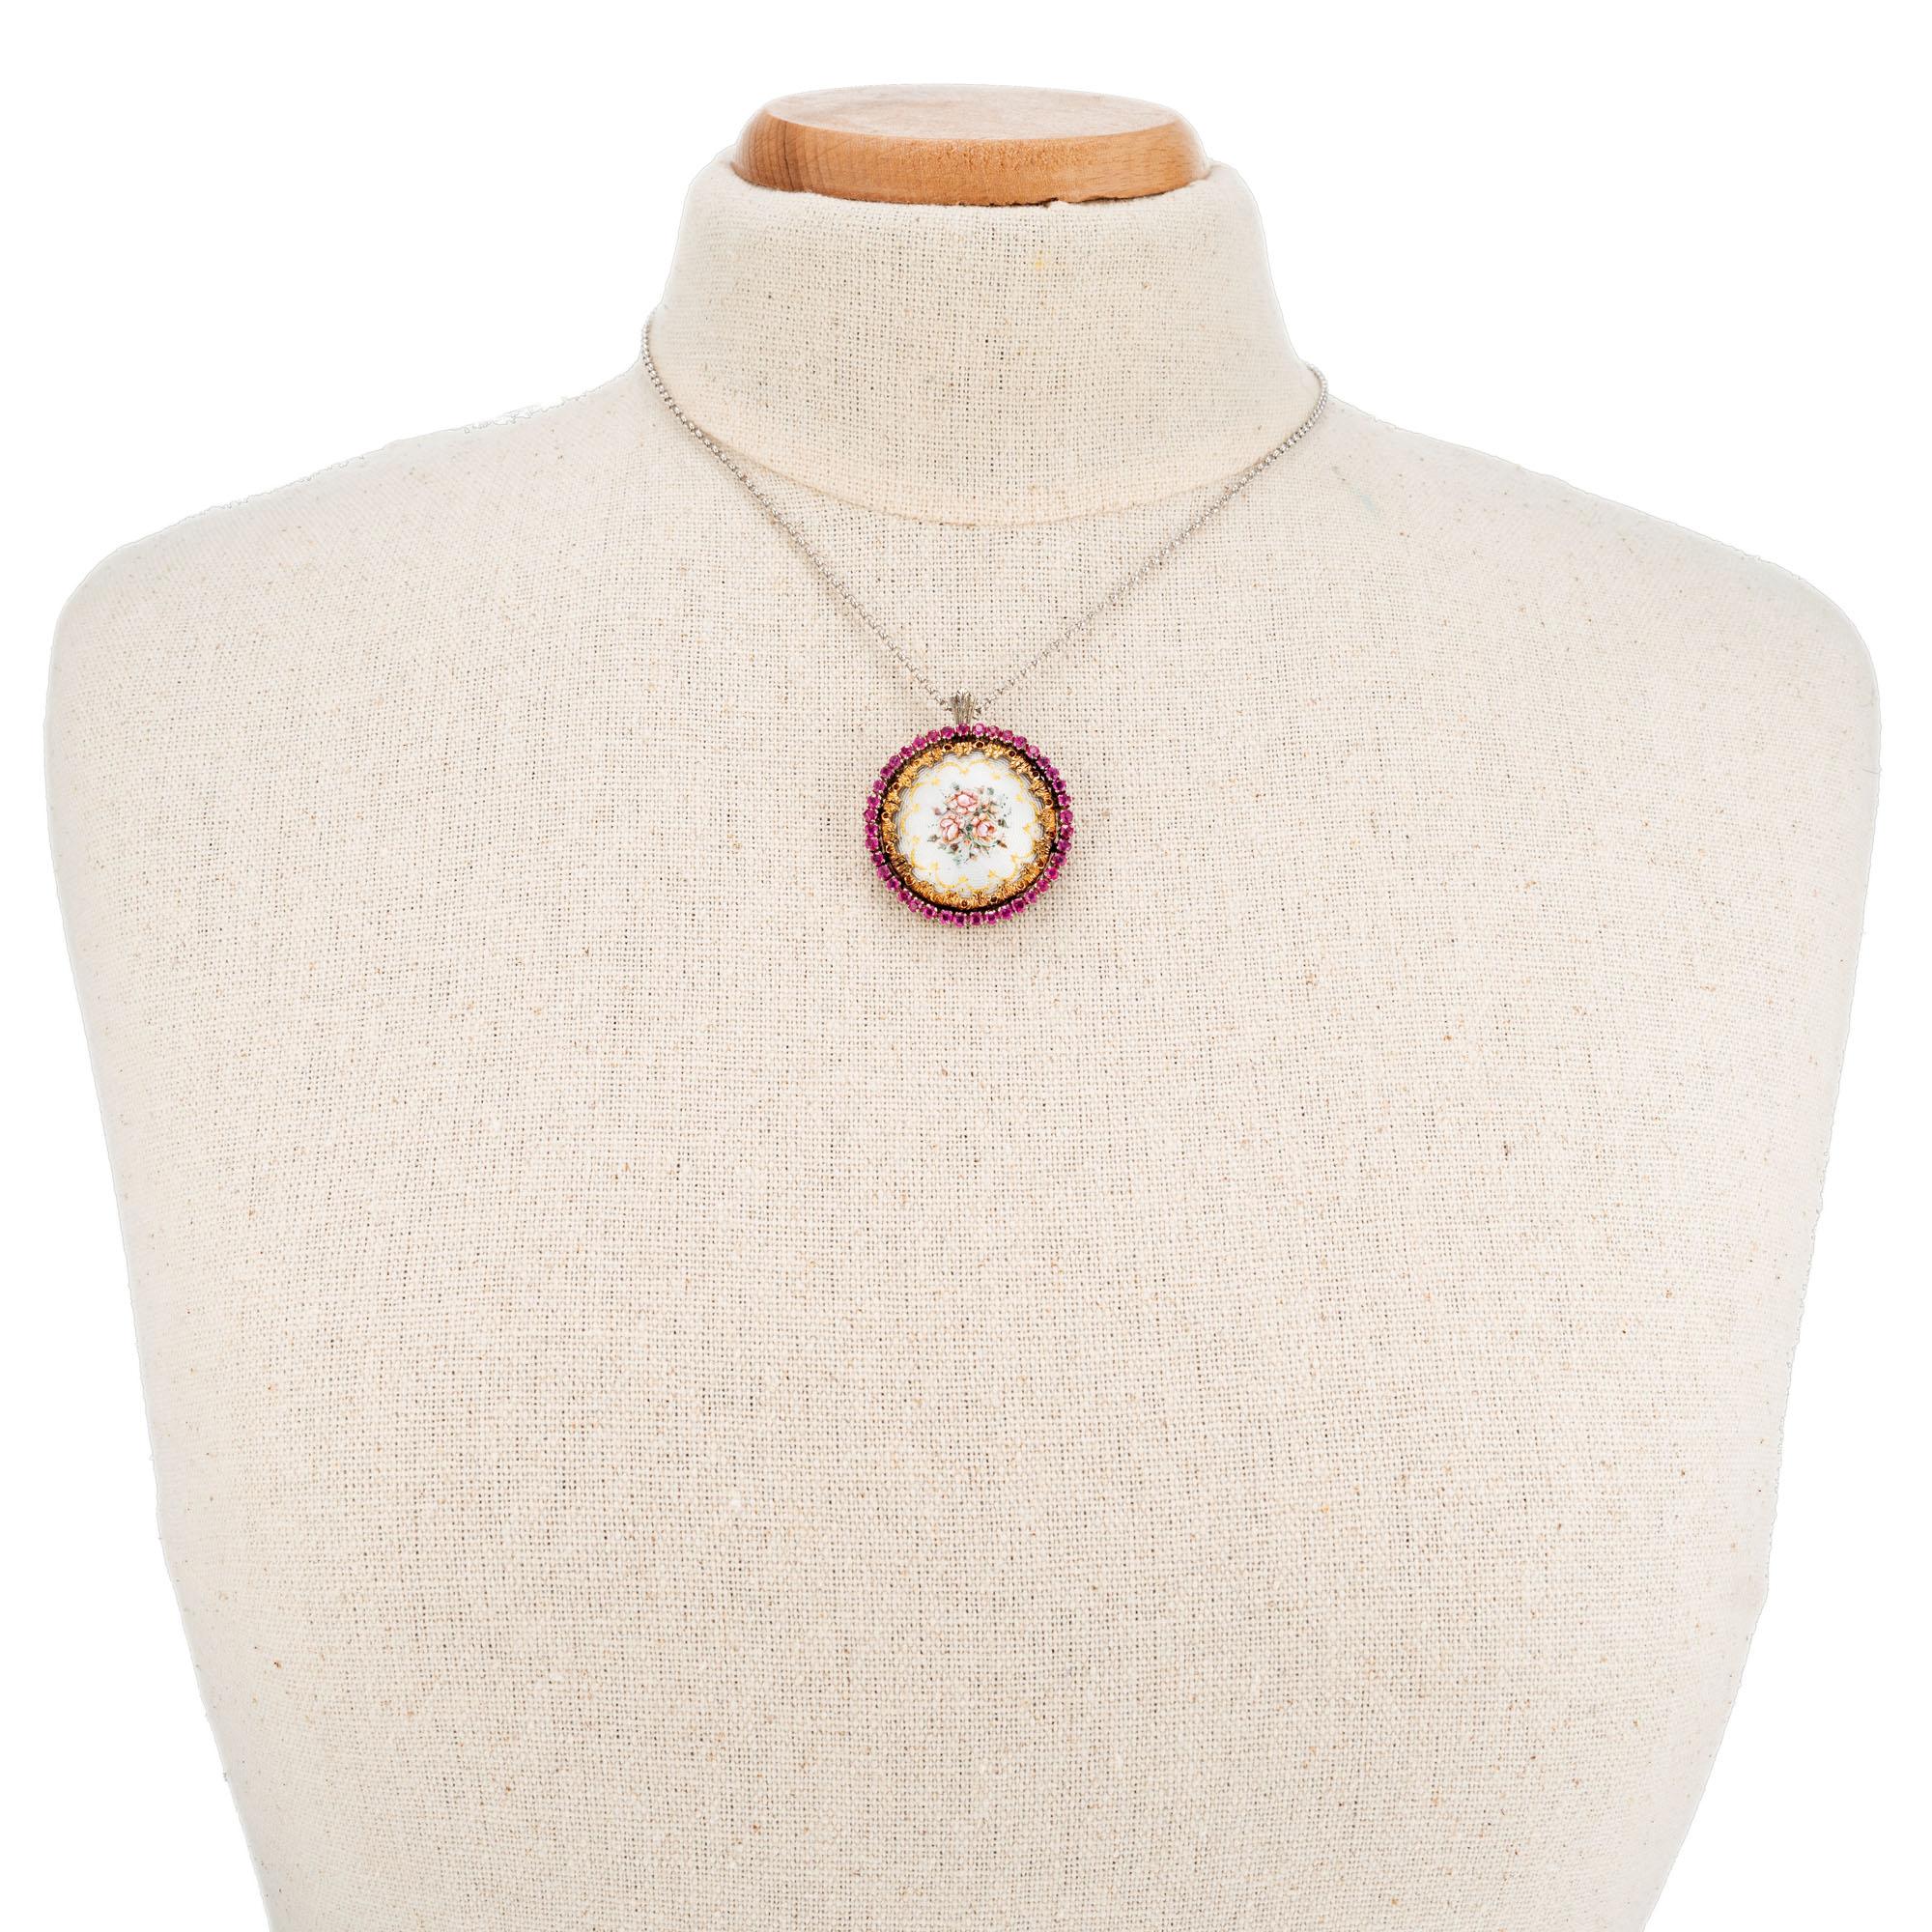 Women's 1.75 Carat Ruby Two-Tone Gold Flower Enamel Circle Brooch Pendant Necklace